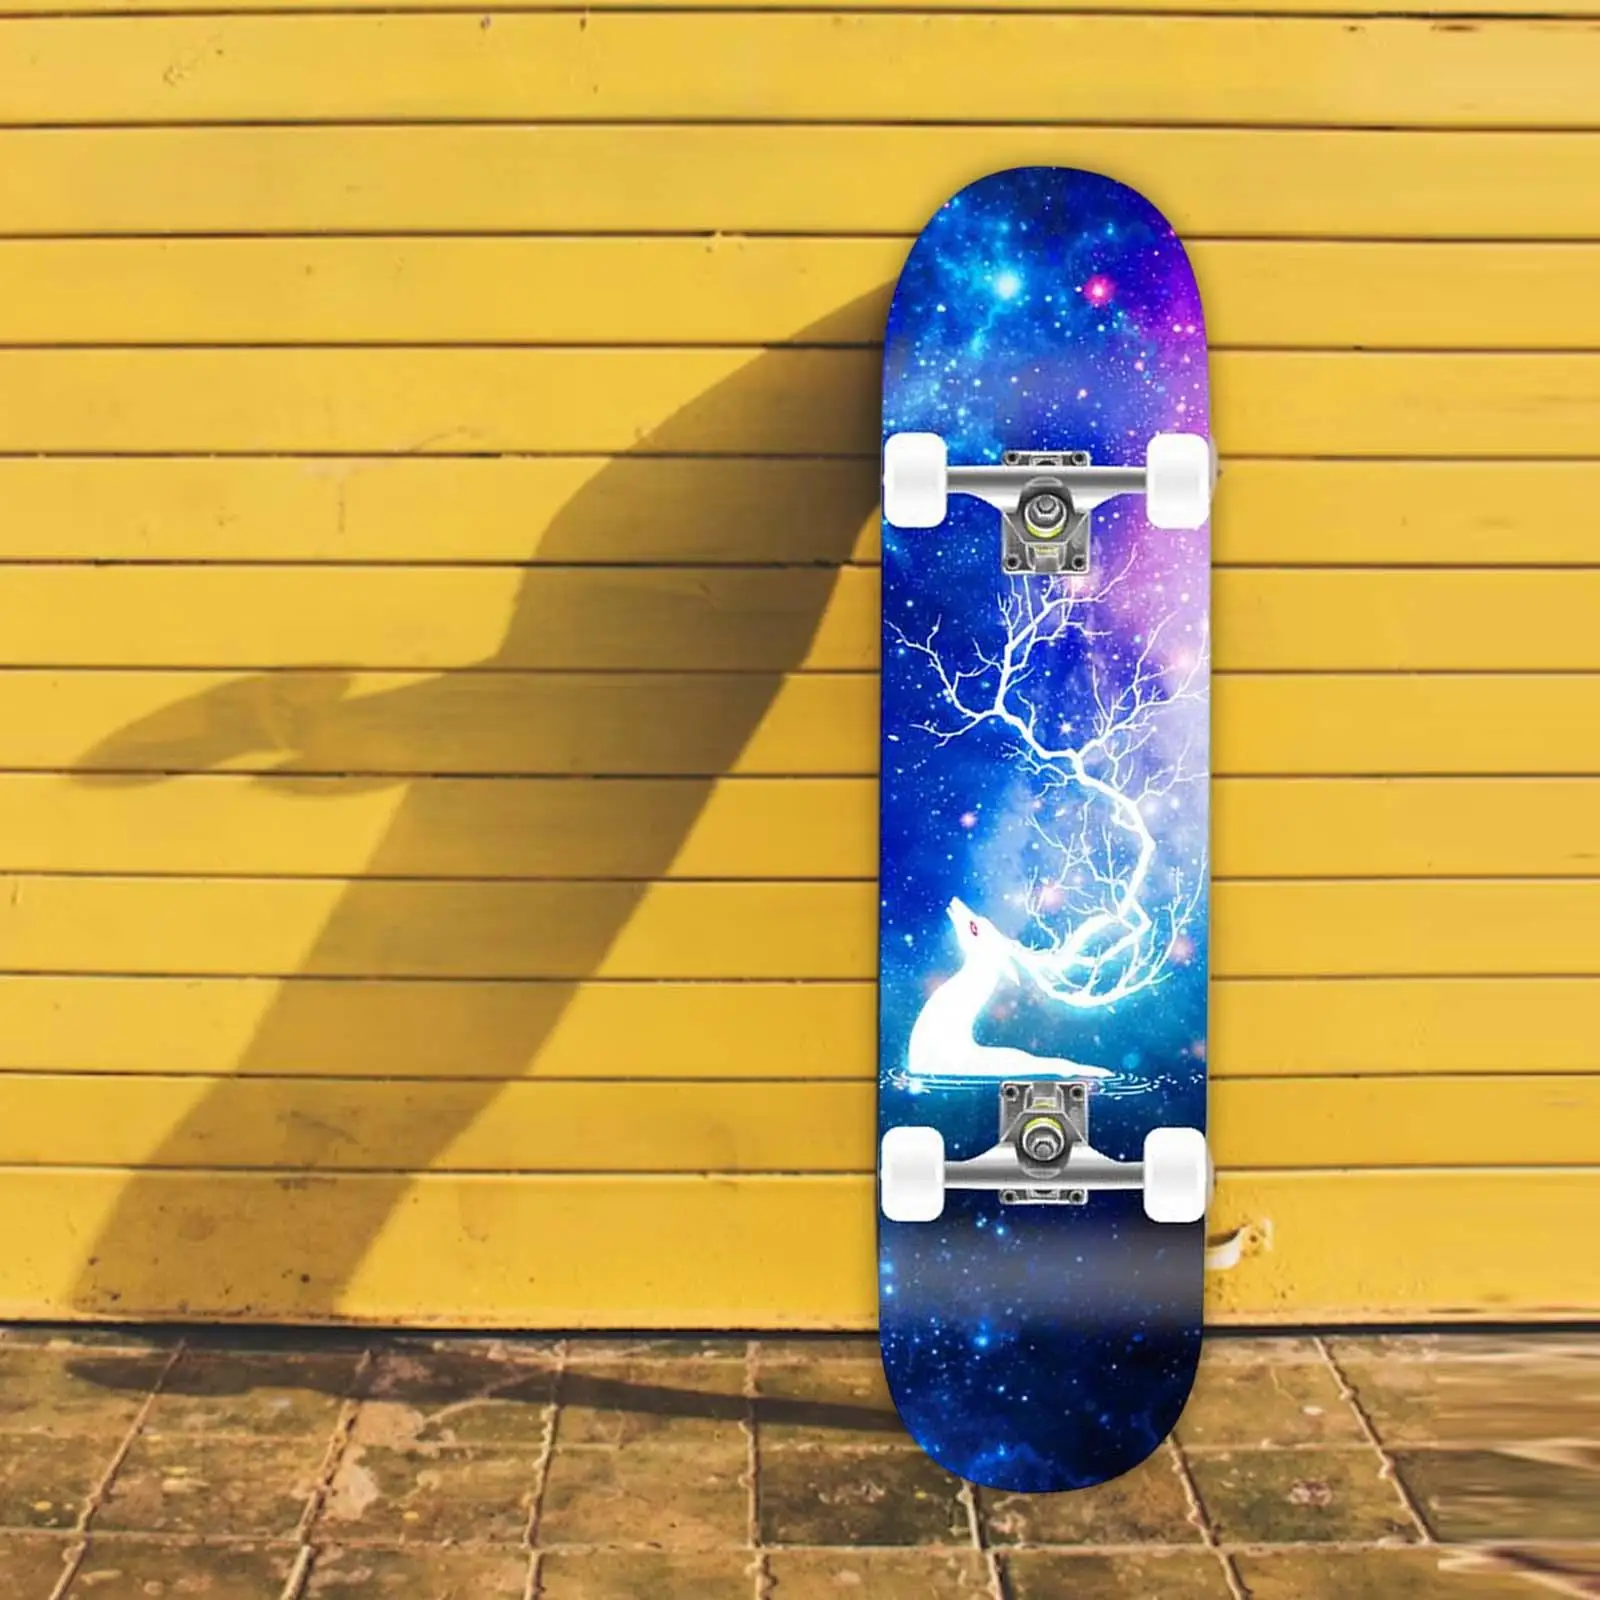 Complete Skateboard Double Kick Steel Bearing Bracket Fully 31 inch Longboard for Beginners Teens Youth Girls Adults